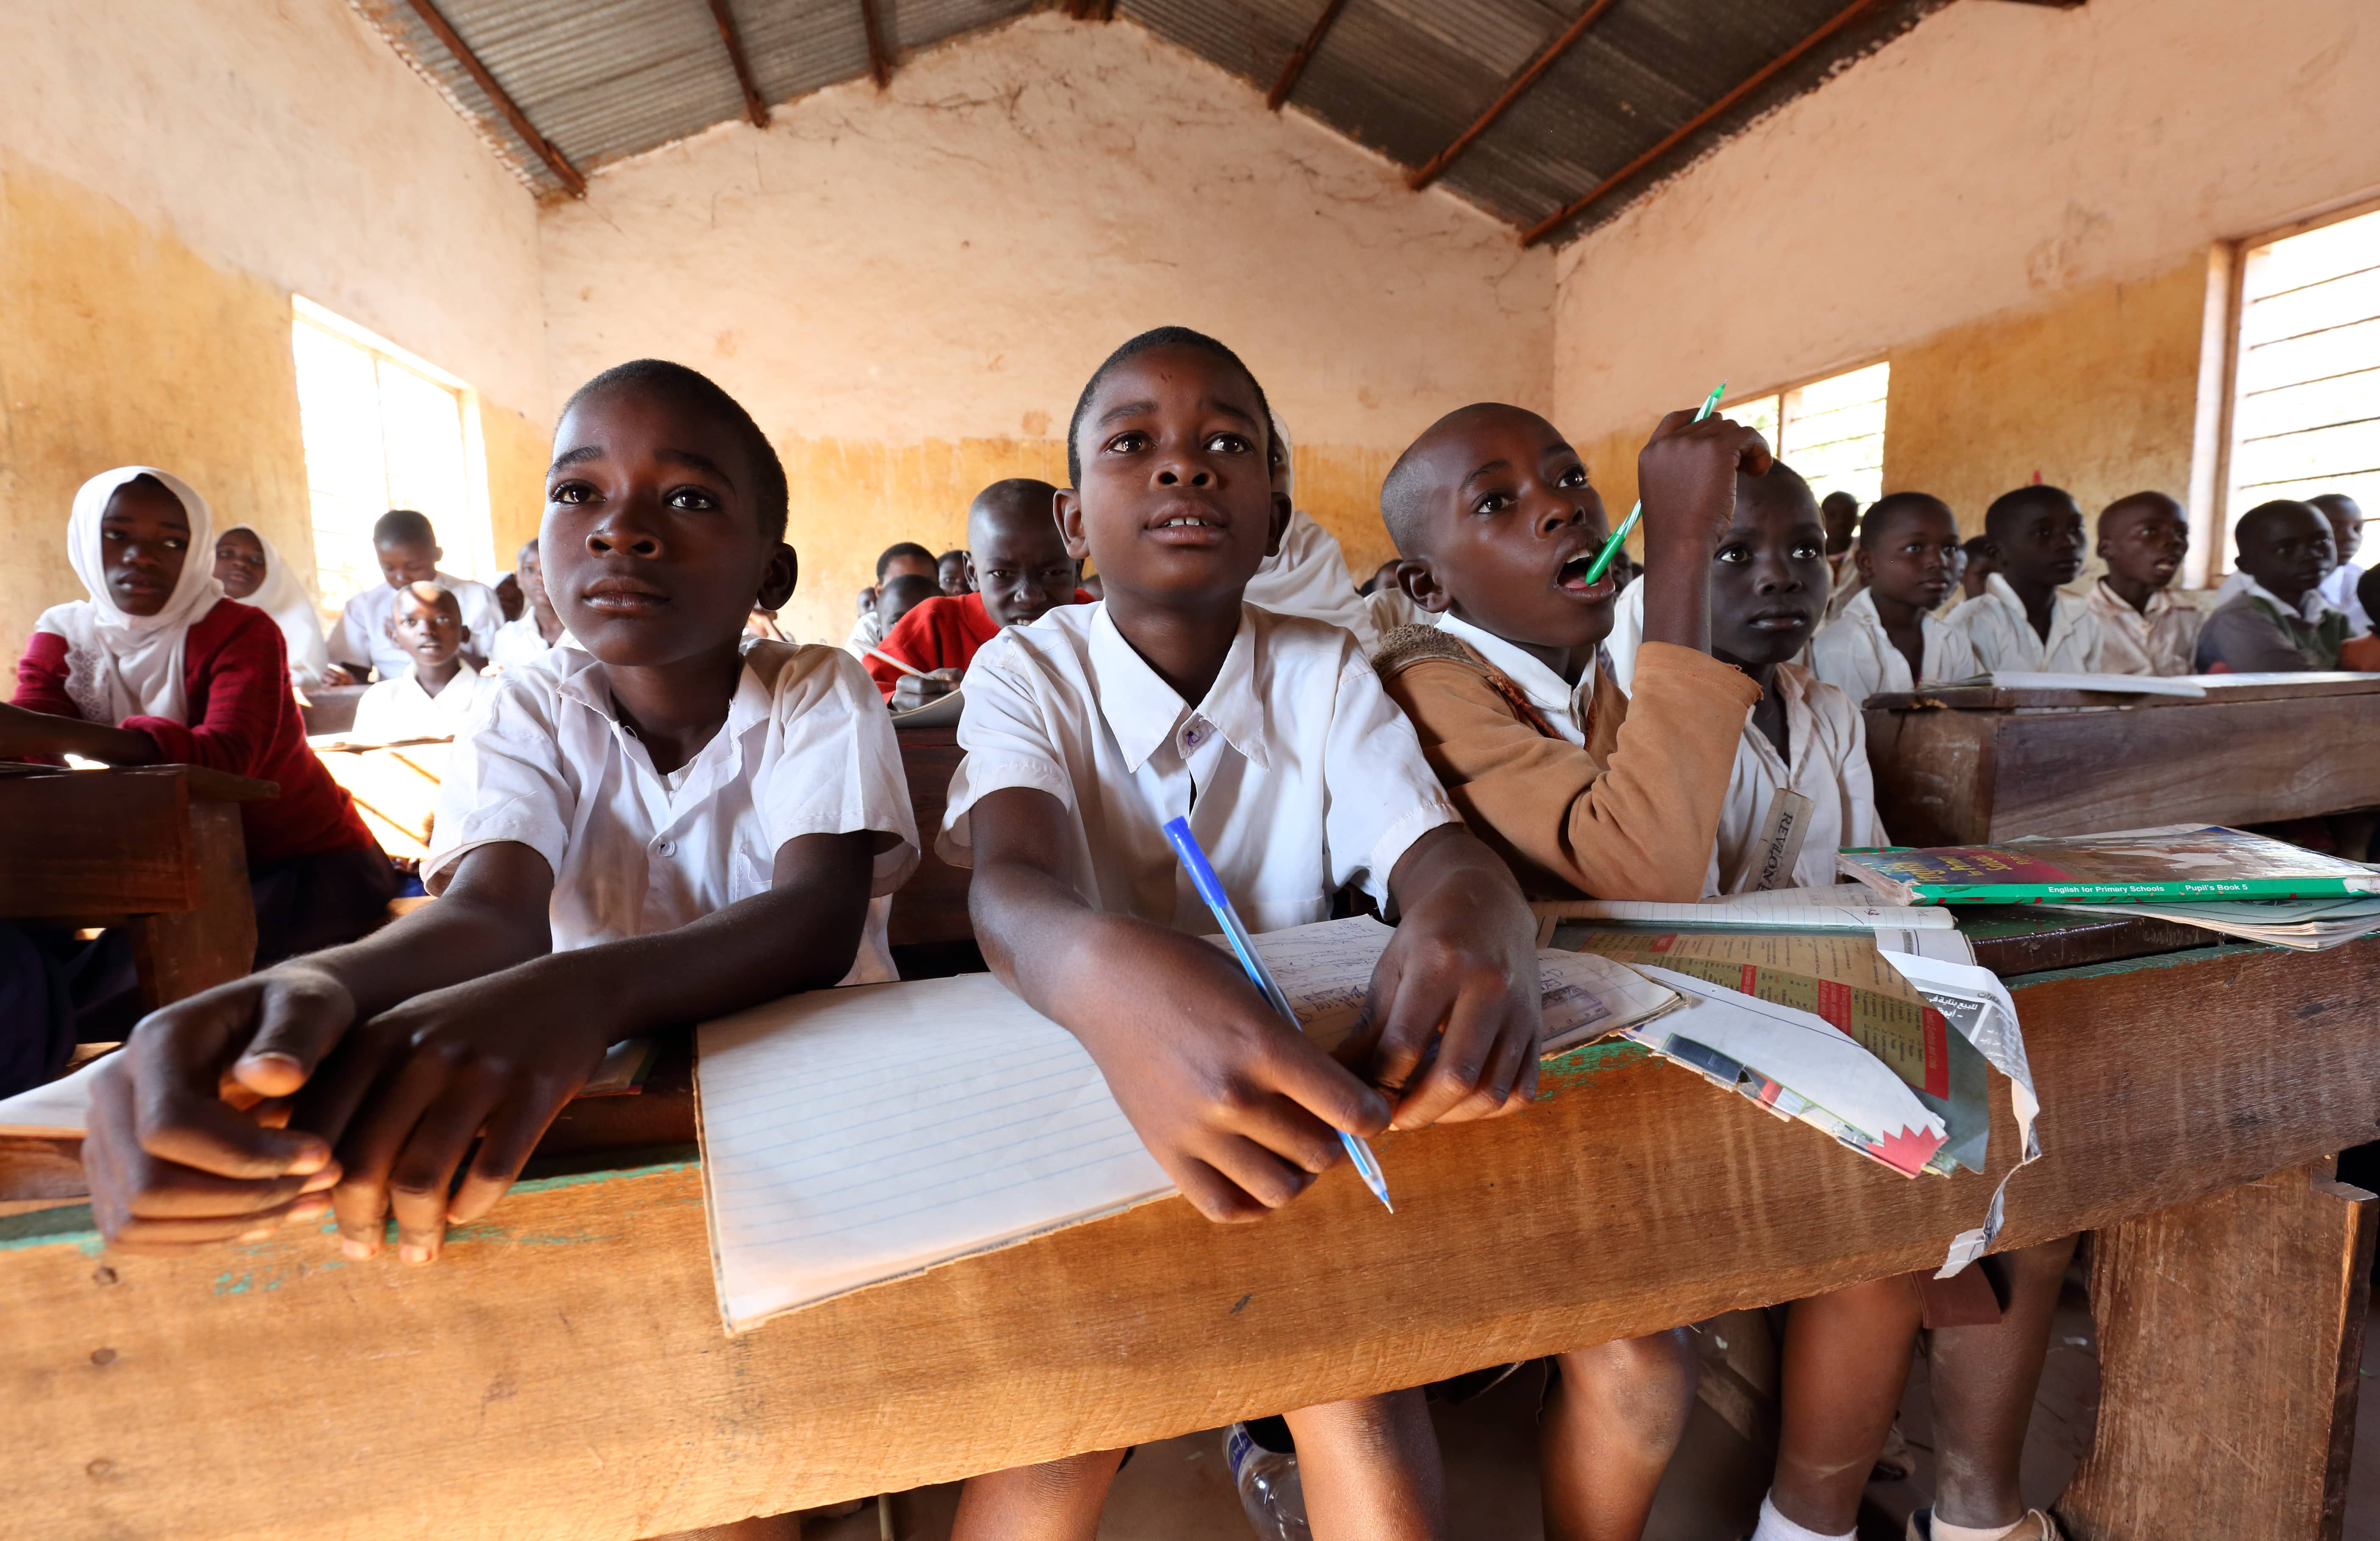 Students in Kigoma, Tanzania; photo: Dietmar Temps/Shutterstock.com